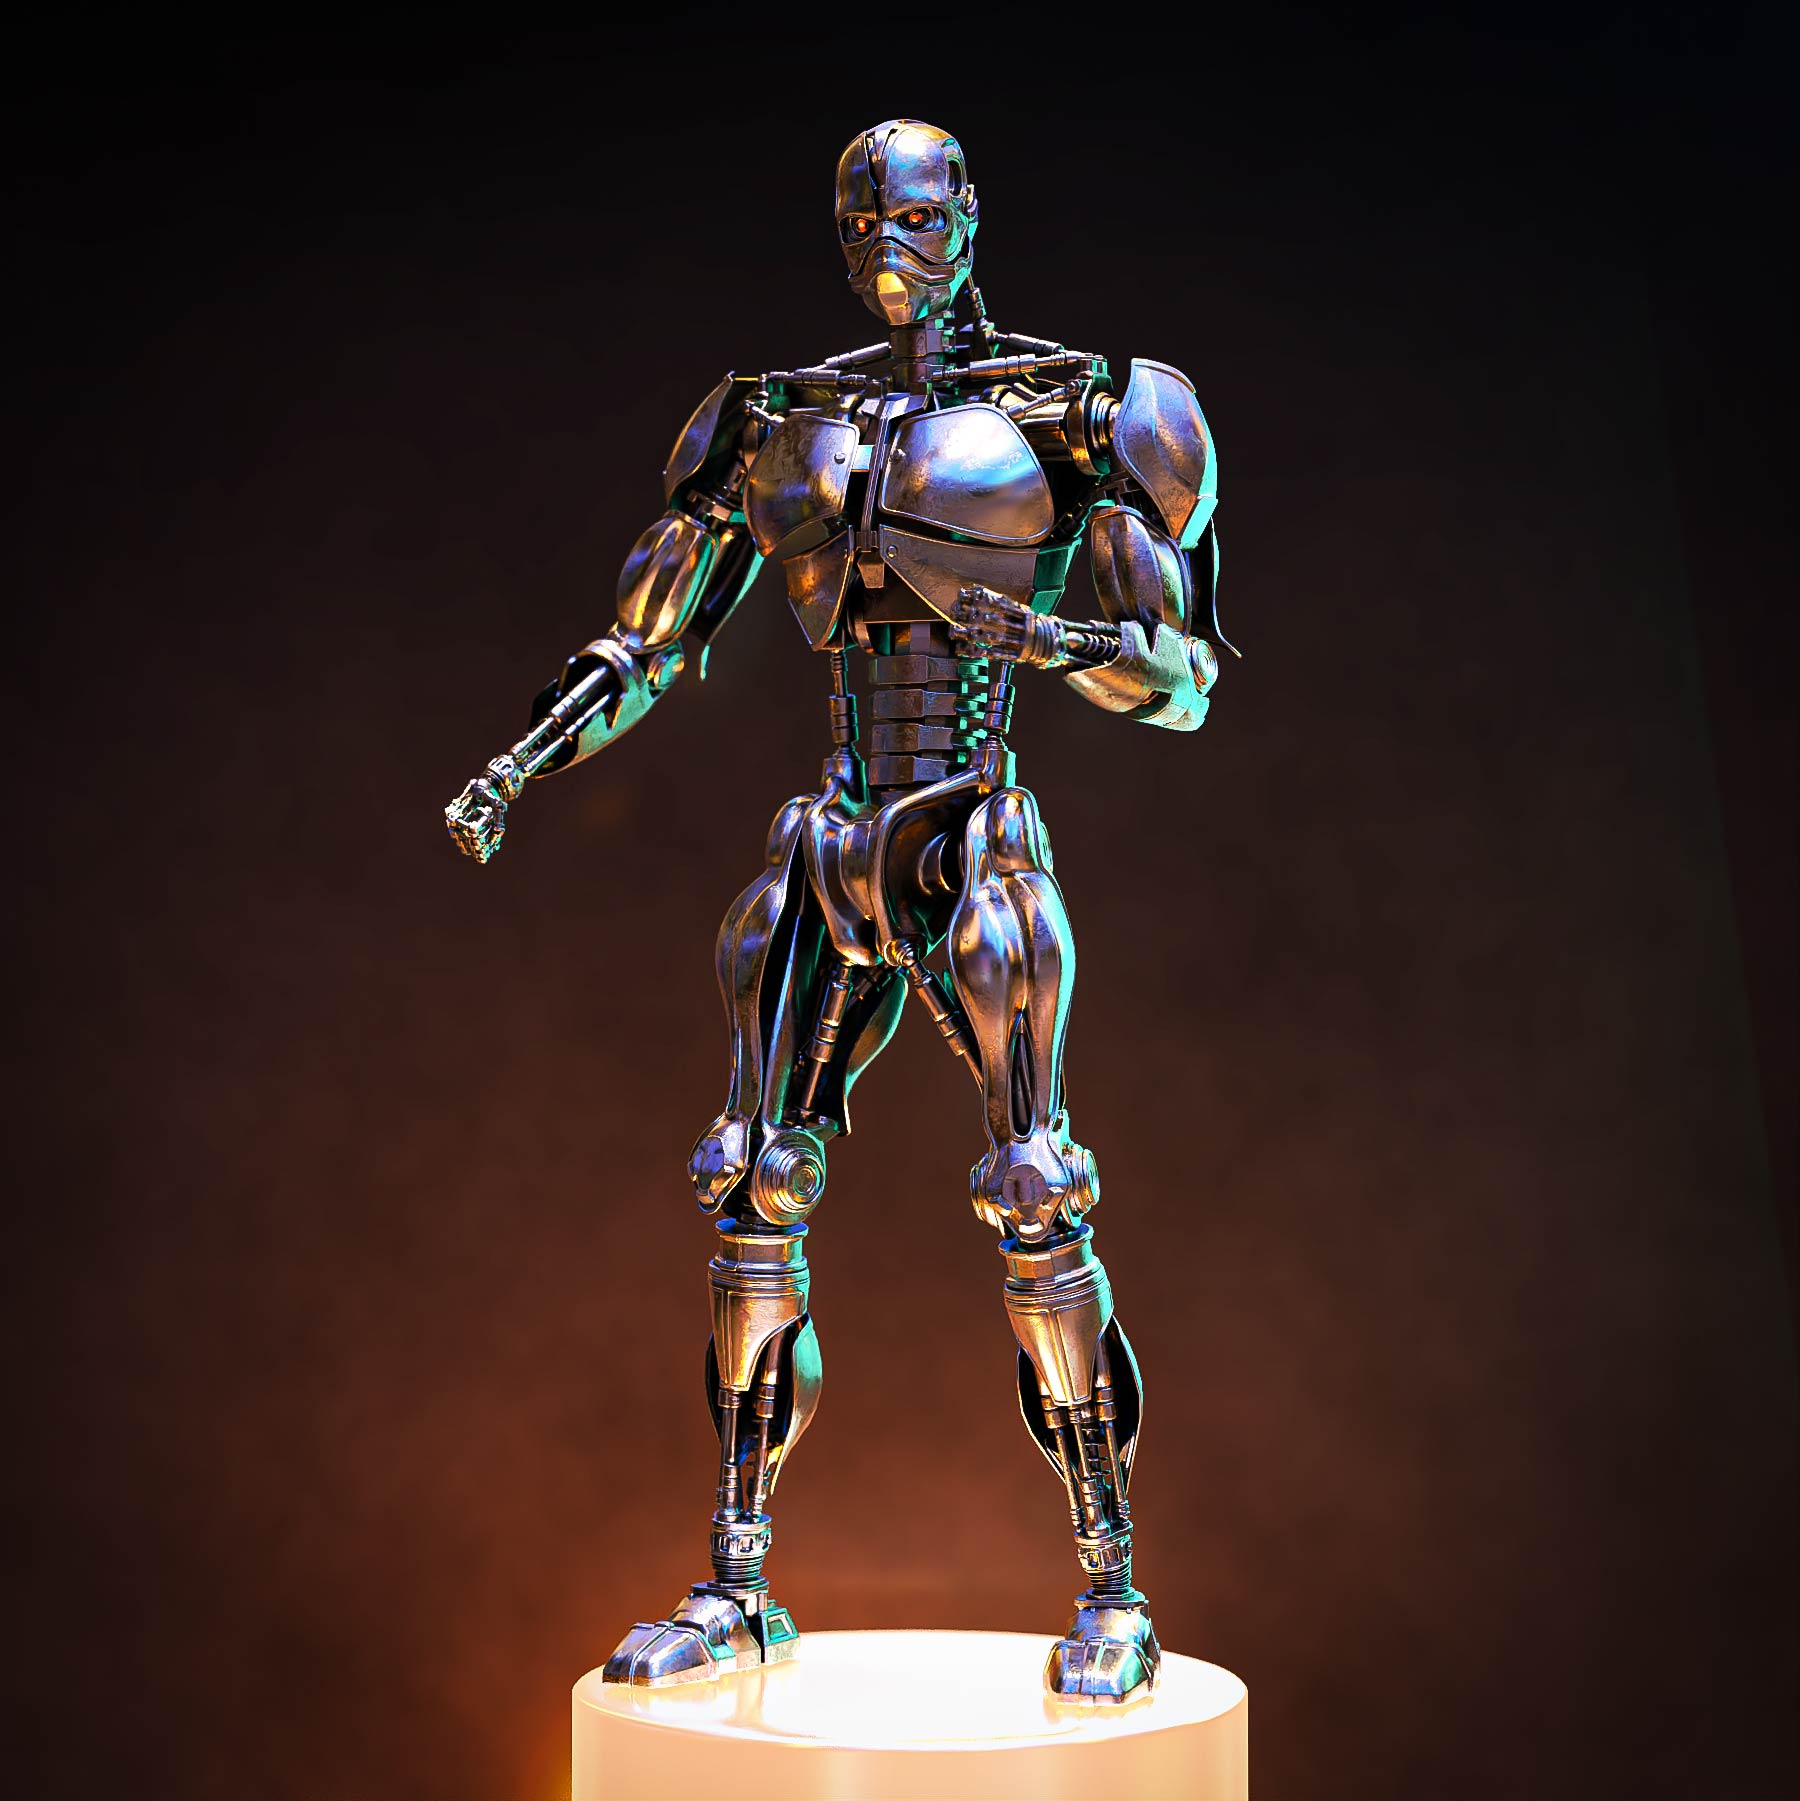 Rigged-Terminator-3D-Model---Futuristic-Cybernetic-Exoskeleton